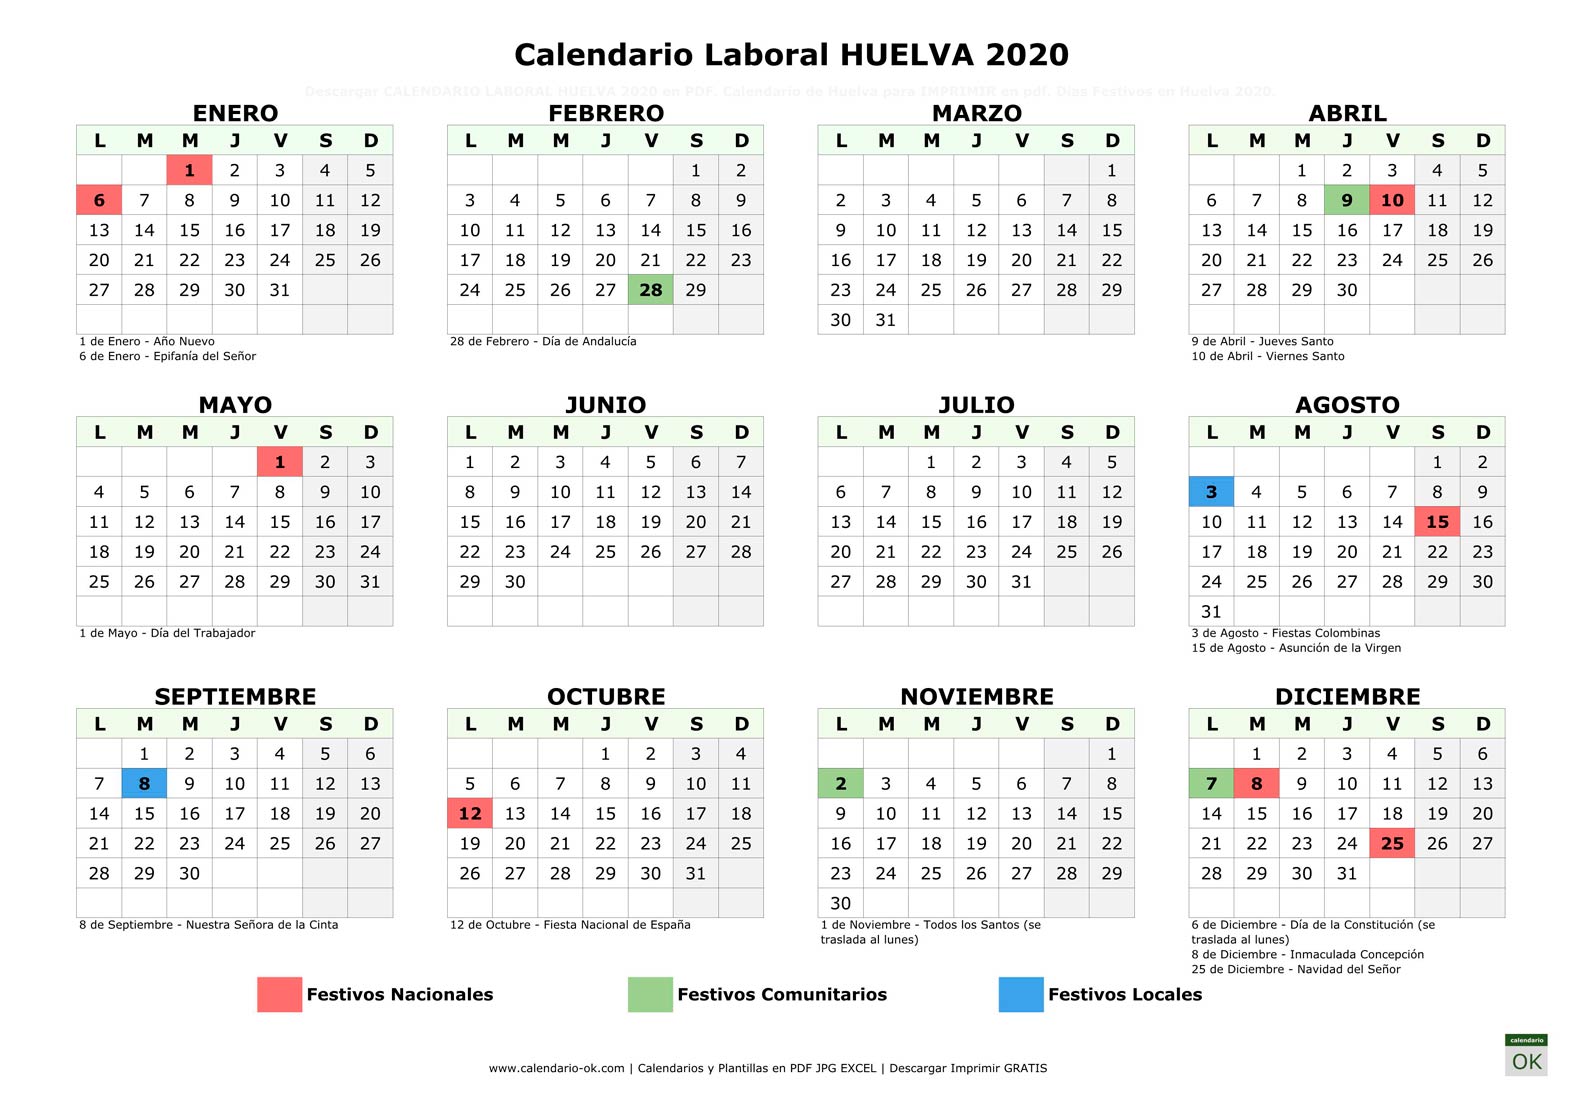 Calendario Laboral HUELVA 2020 horizontal